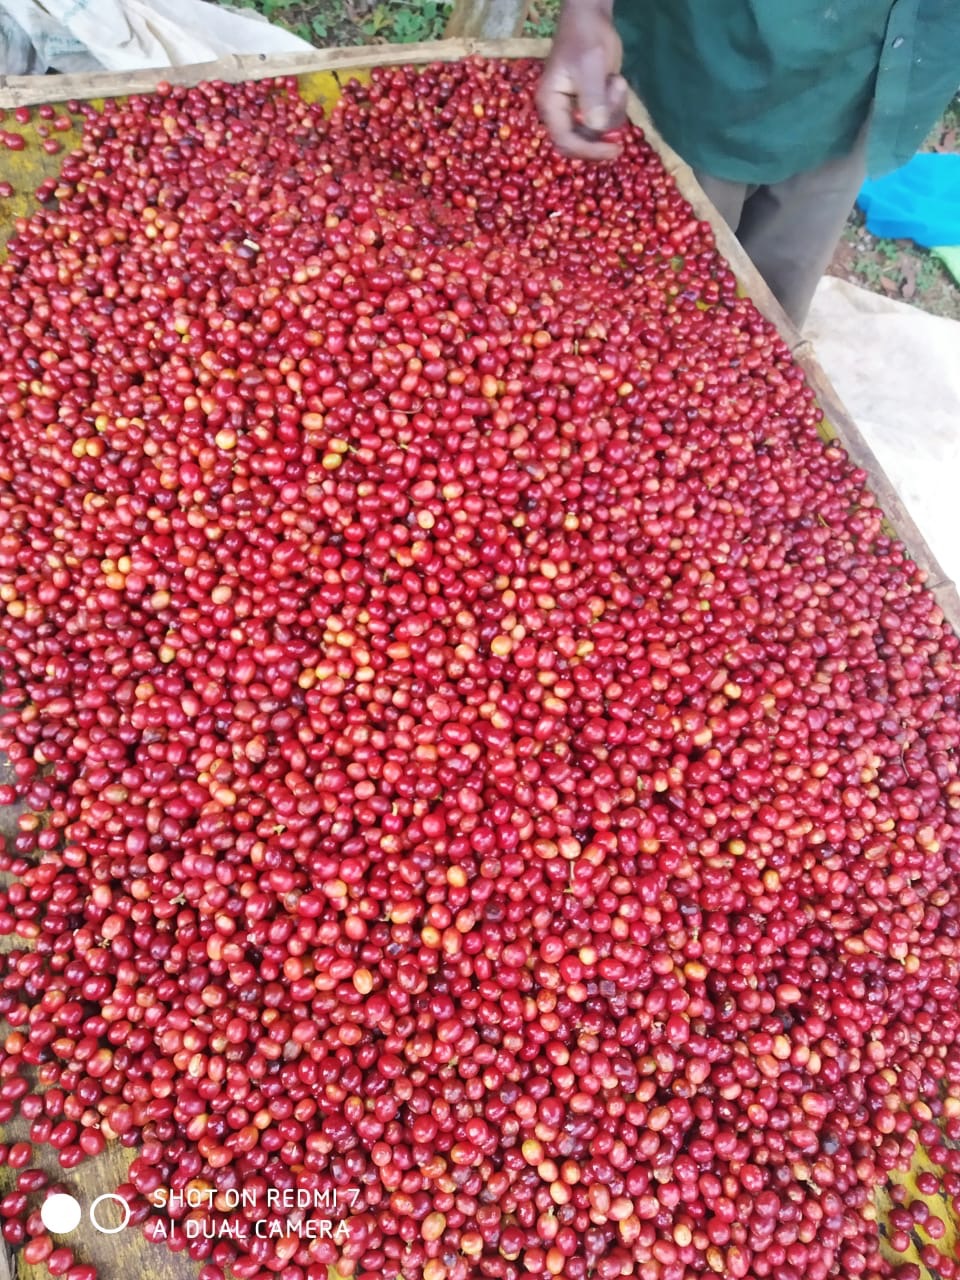 FTUV5999 Batian Quality Control Cherries.jpg